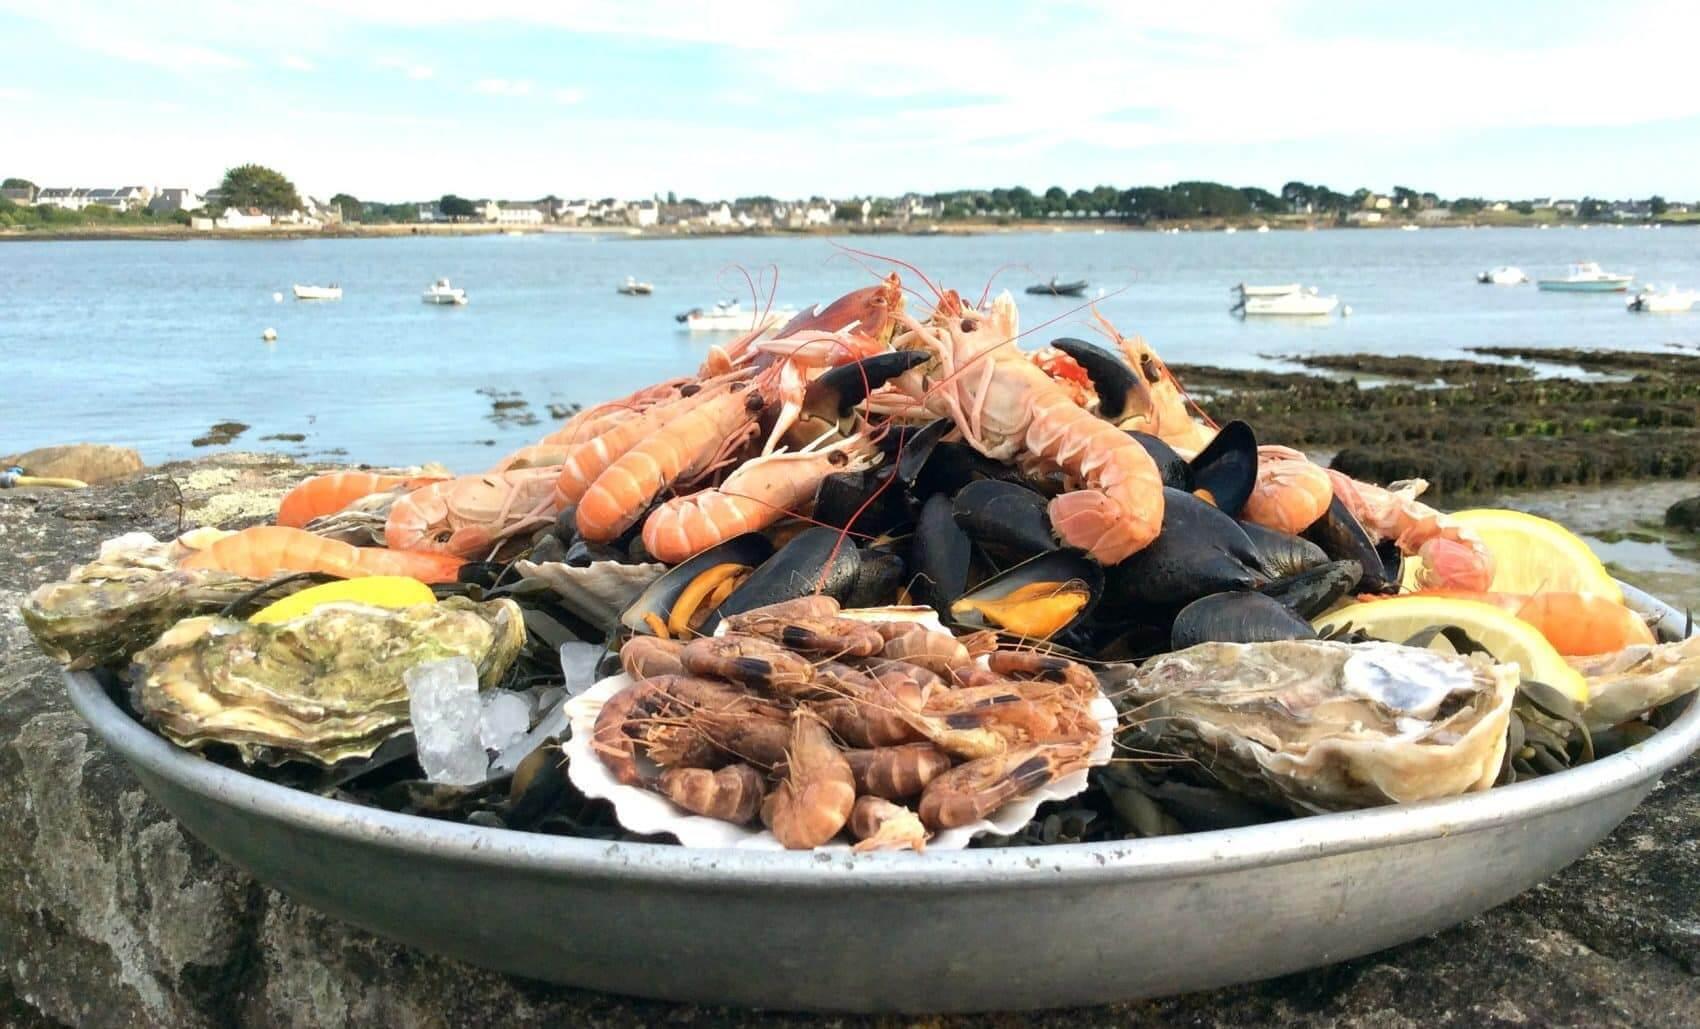 Bretagne degustaion st guillaume fruits de mer morbihan plouhinec e1519218169643